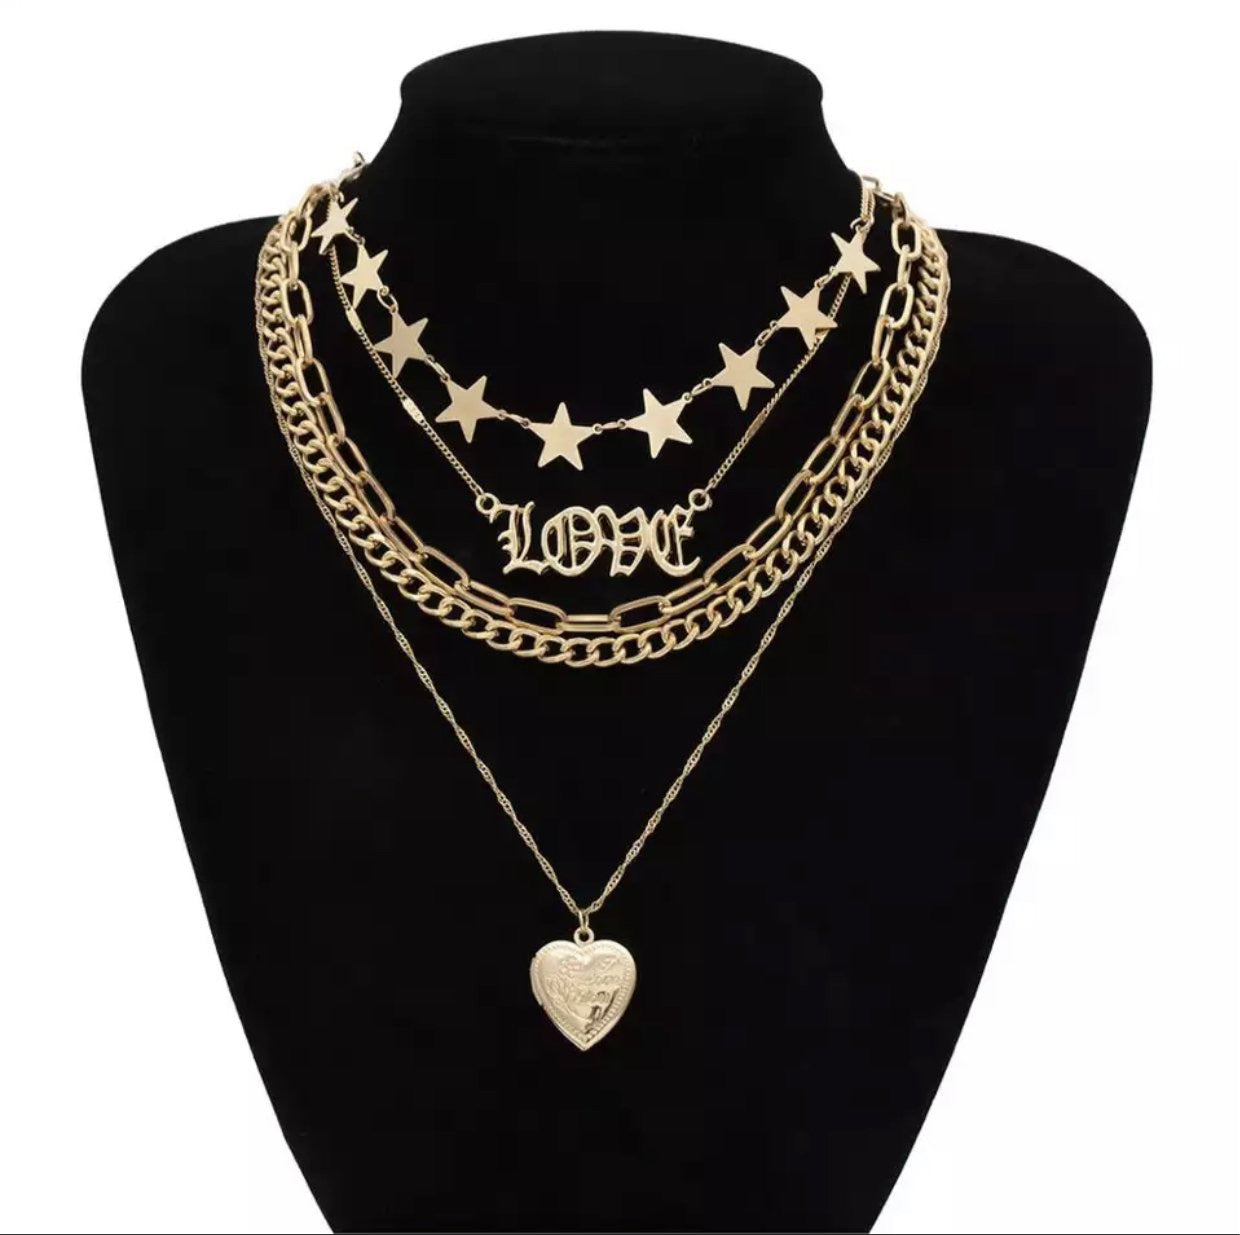 Heart Stones Gold | Women’s Necklace Preorder Ships 5/20 - Seasonal Secrets